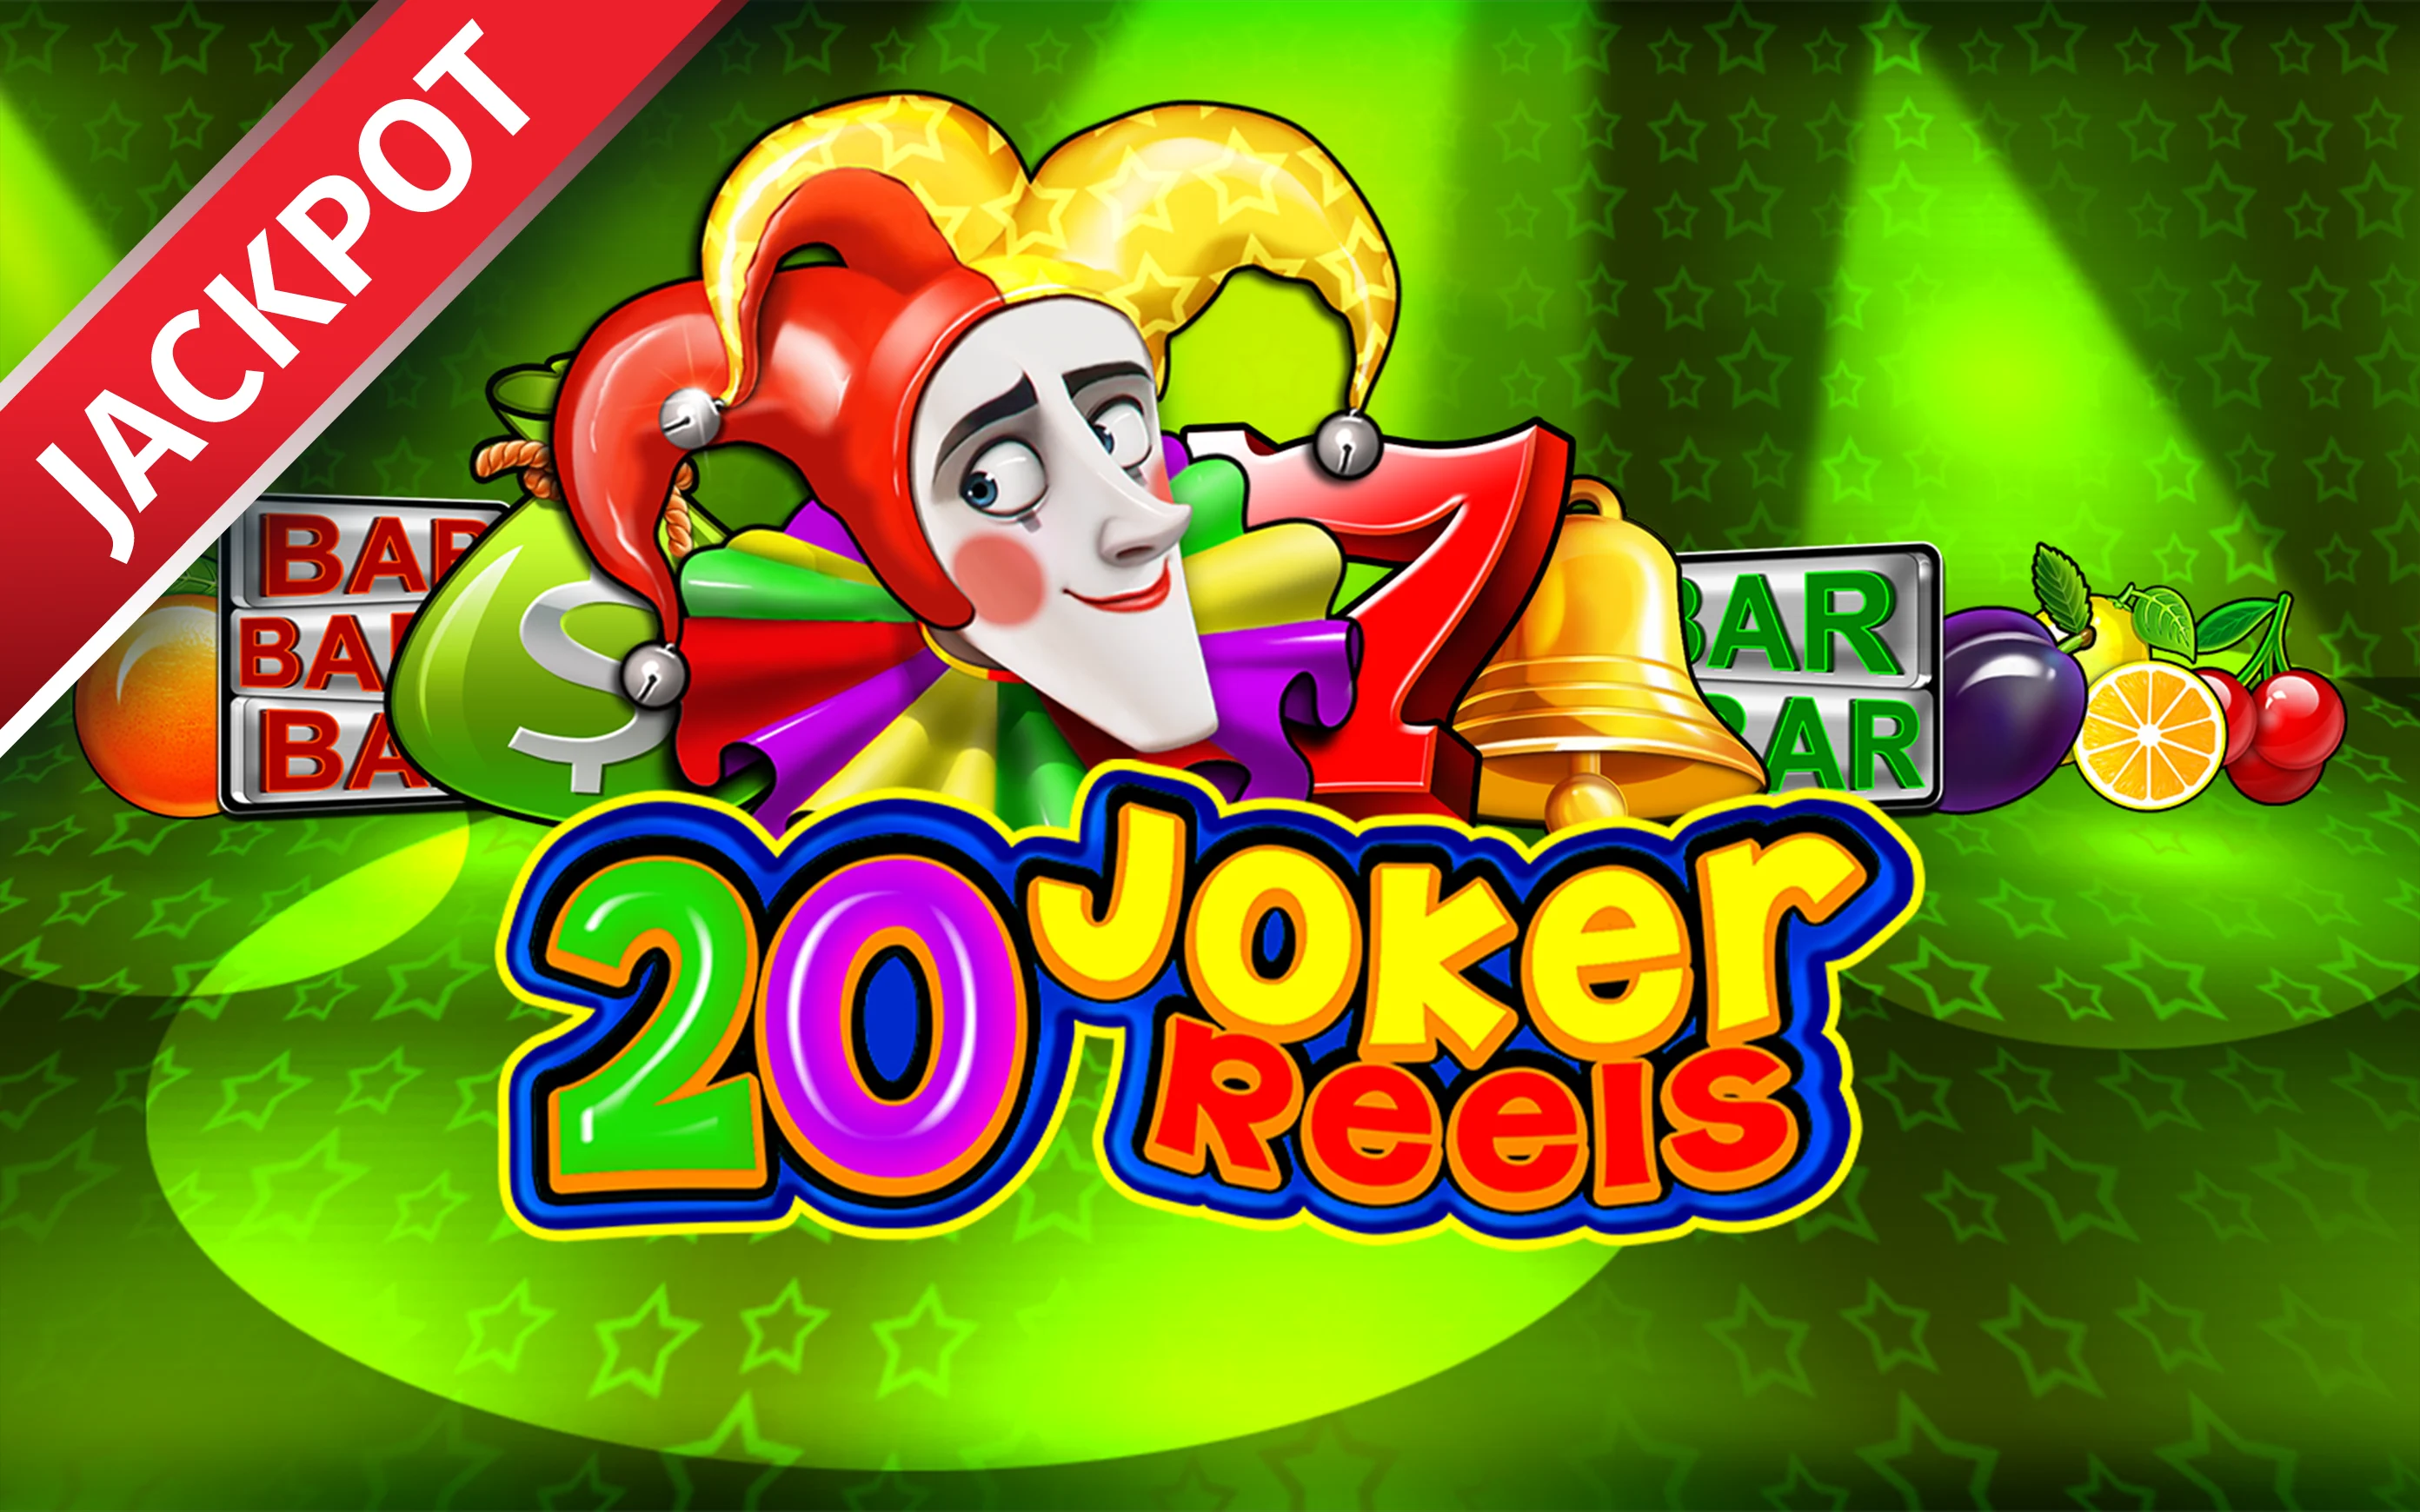 Chơi 20 Joker Reels trên sòng bạc trực tuyến Starcasino.be